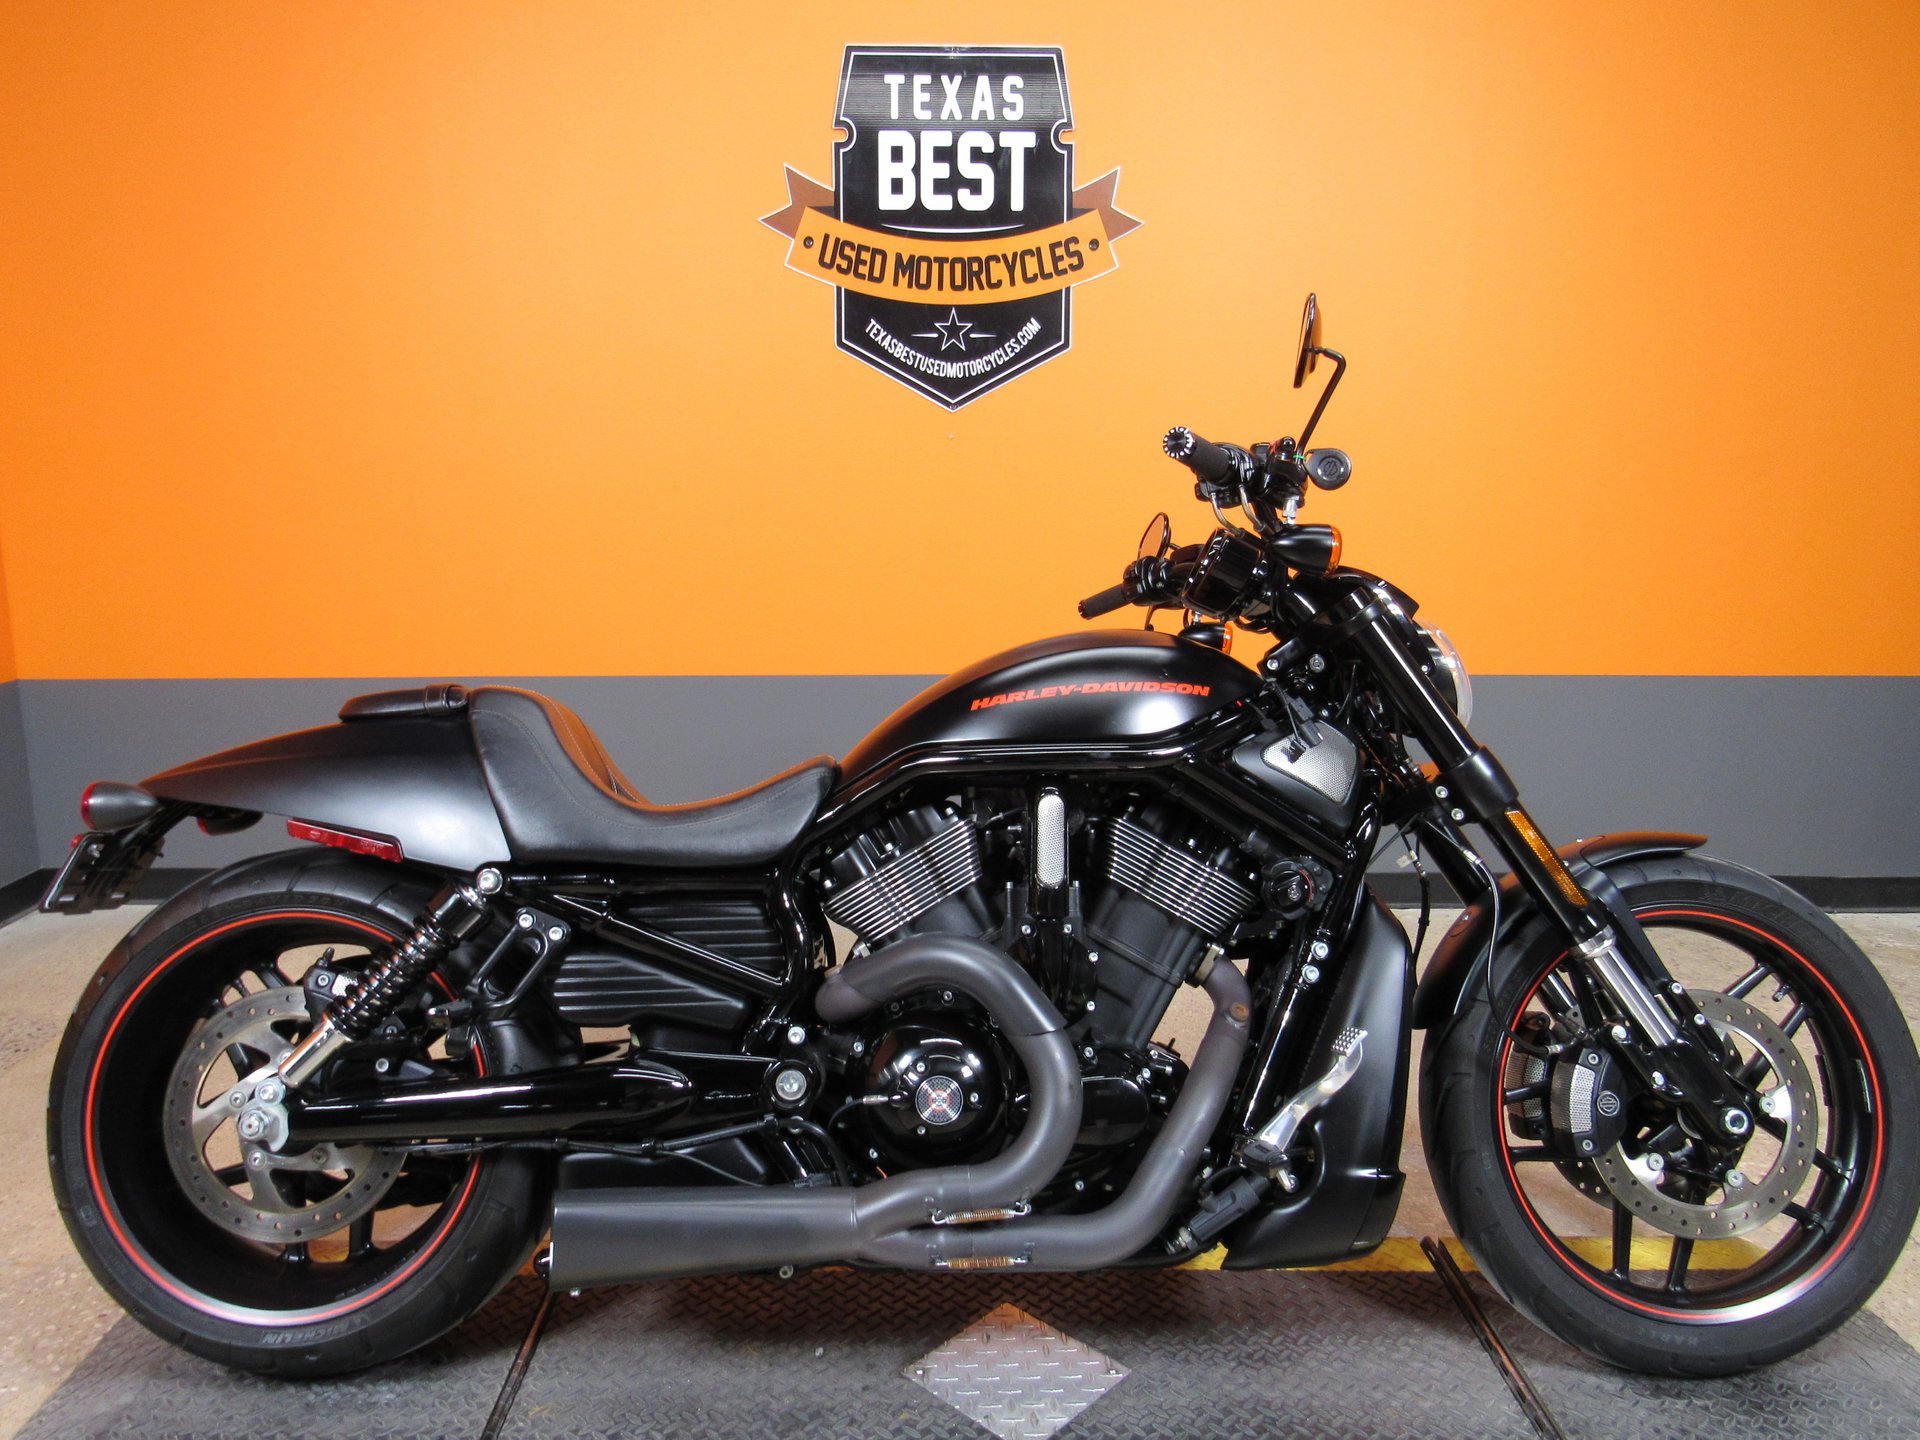 2014 Harley-Davidson V-Rod | American Motorcycle Trading Company - Used